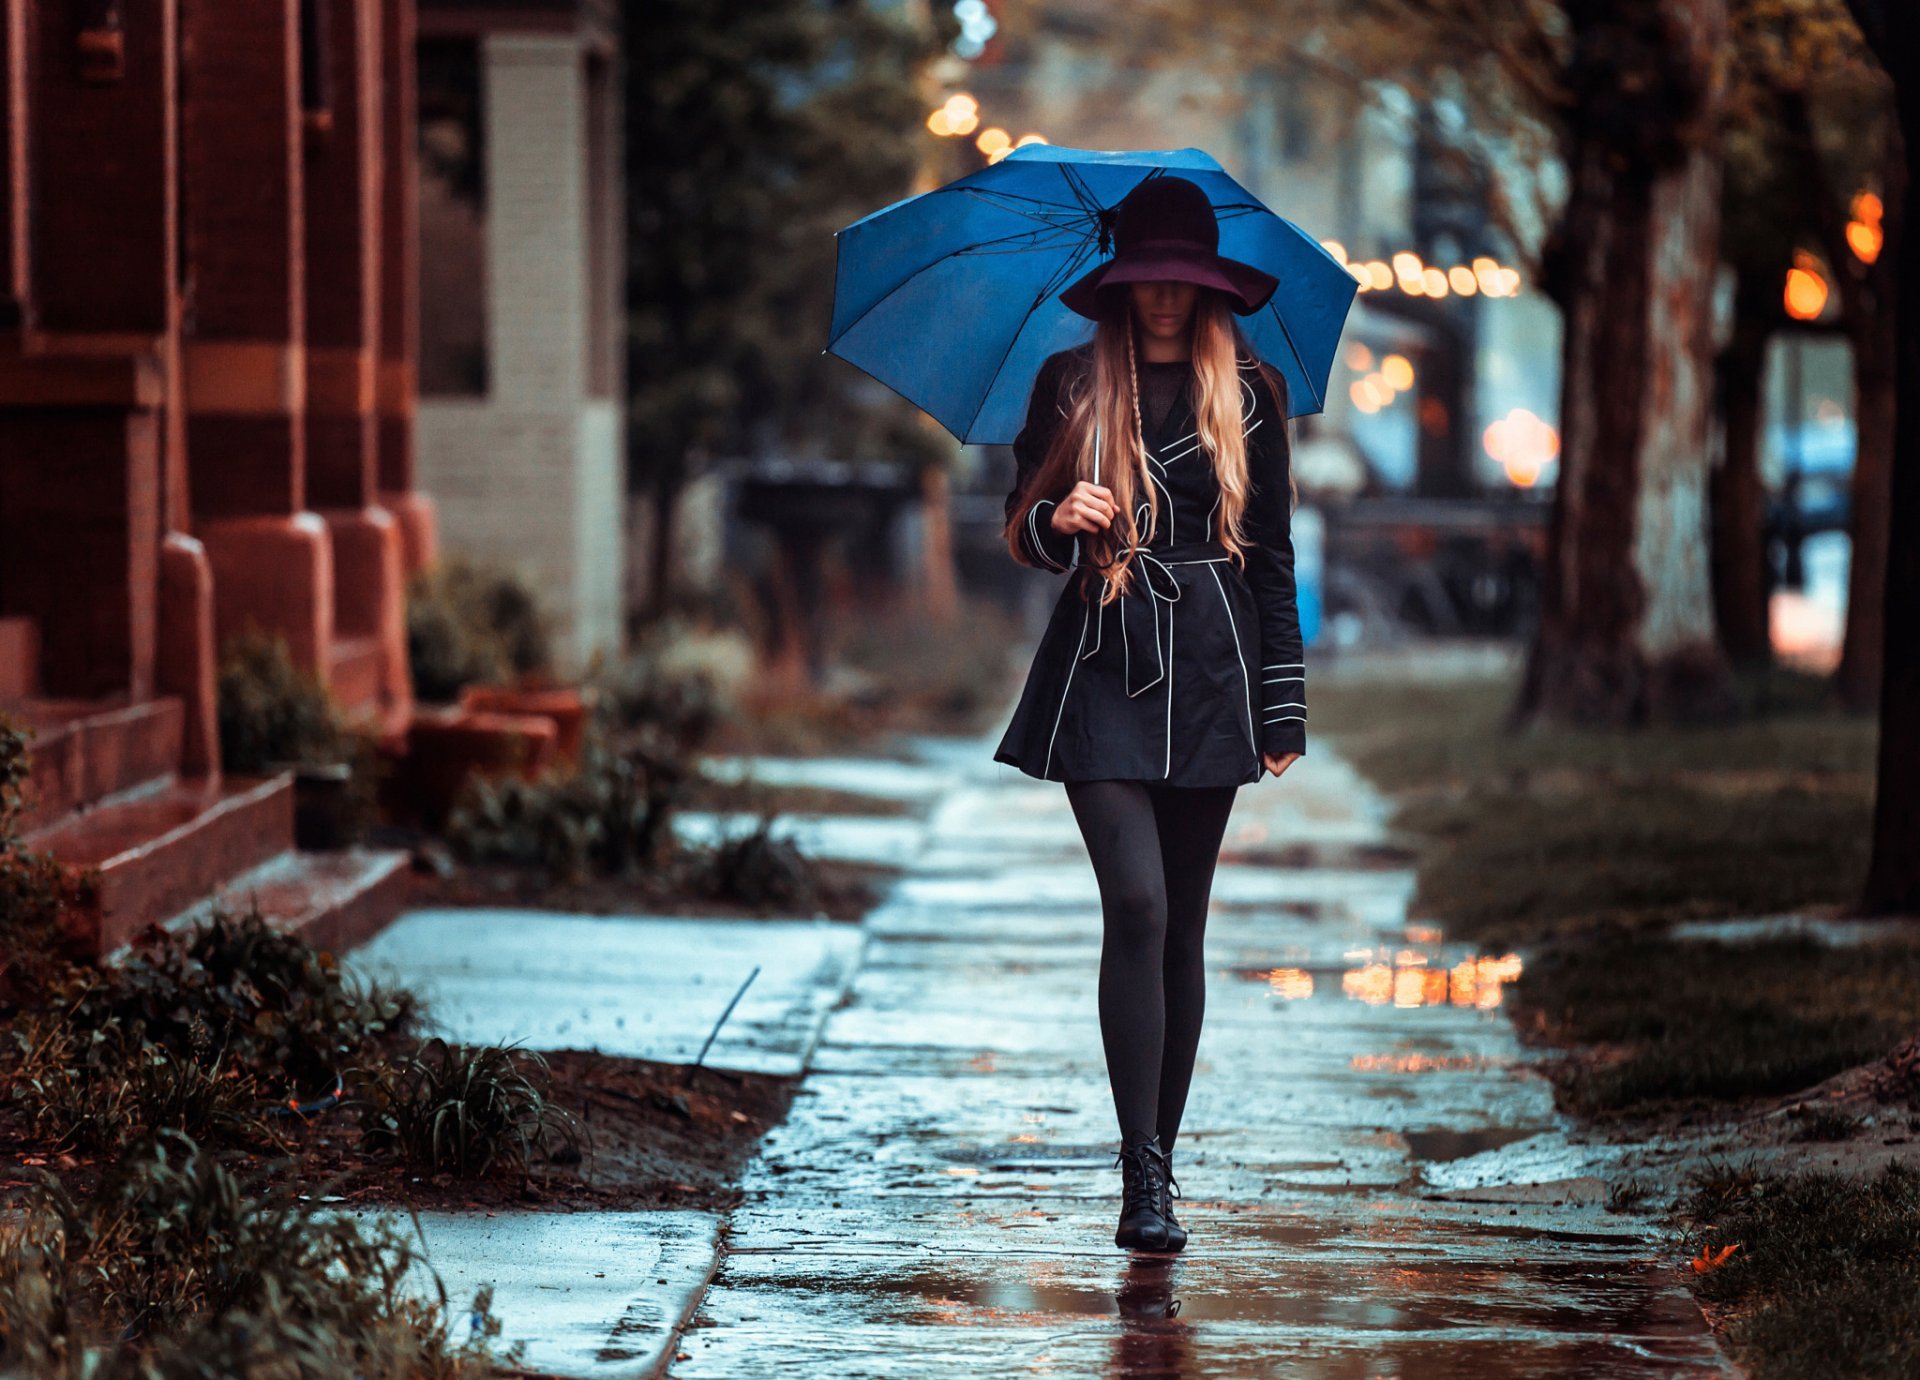 rainy-day-girl-street-umbrella-rain-gait.jpg